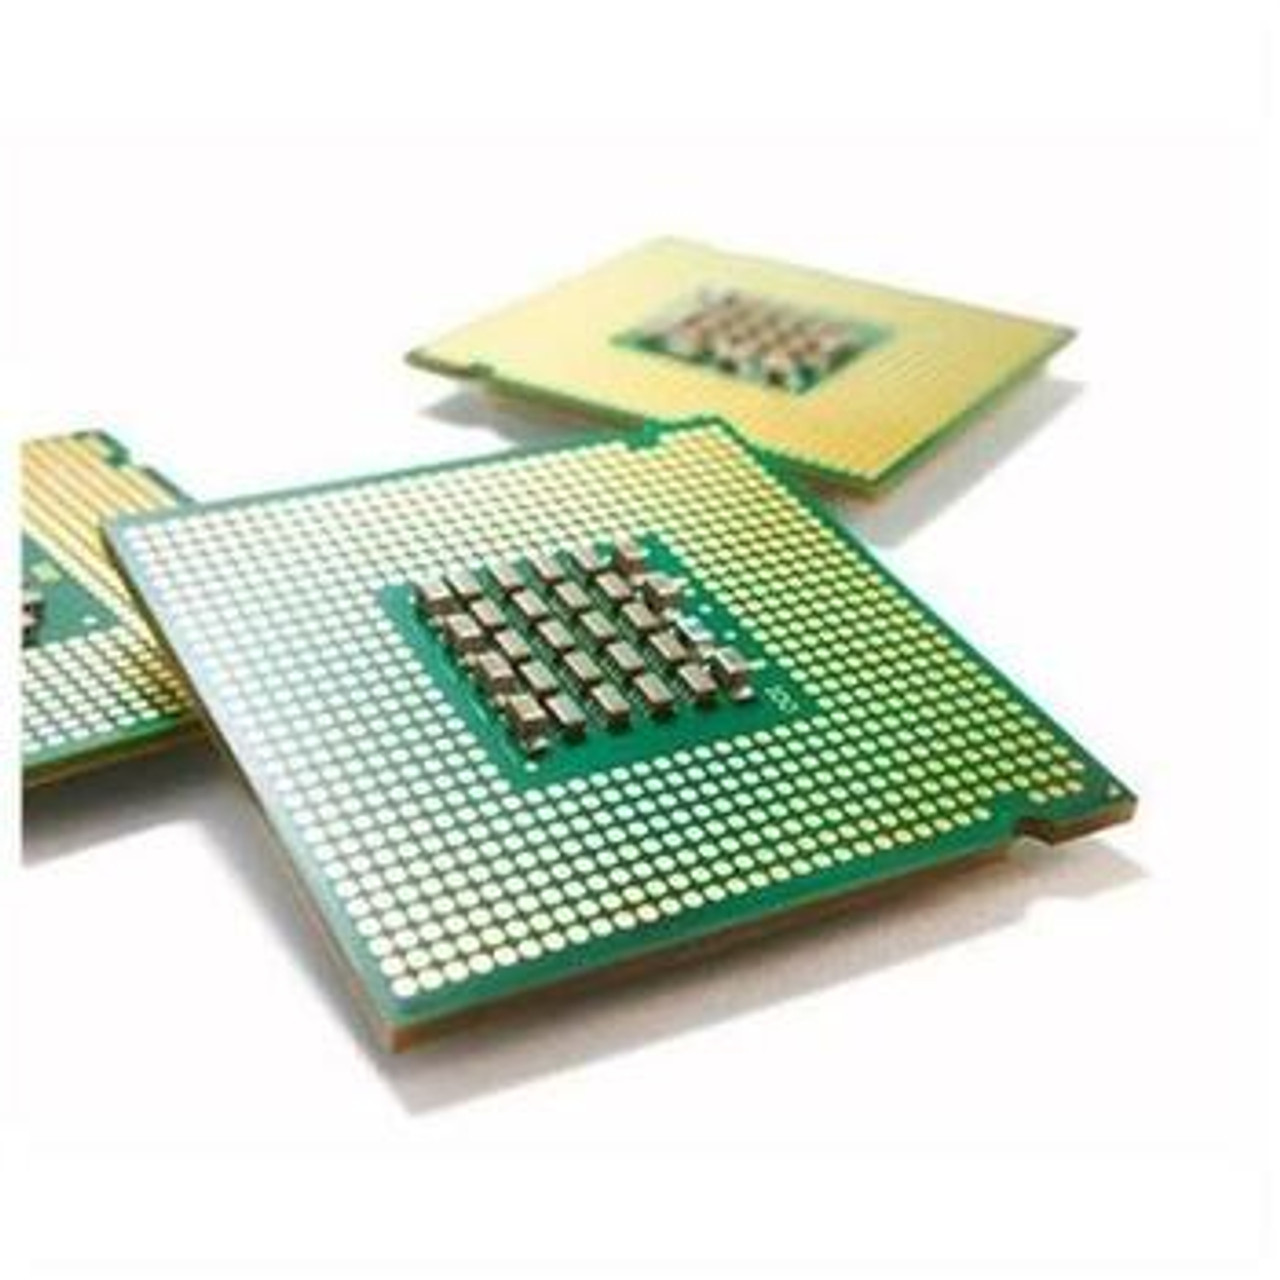 P4X-DPE52618LV3-SR20 SuperMicro Xeon Processor E5-2618L V3 8 Core 2.30GHz LGA 2011-3 20 MB L3 Processor